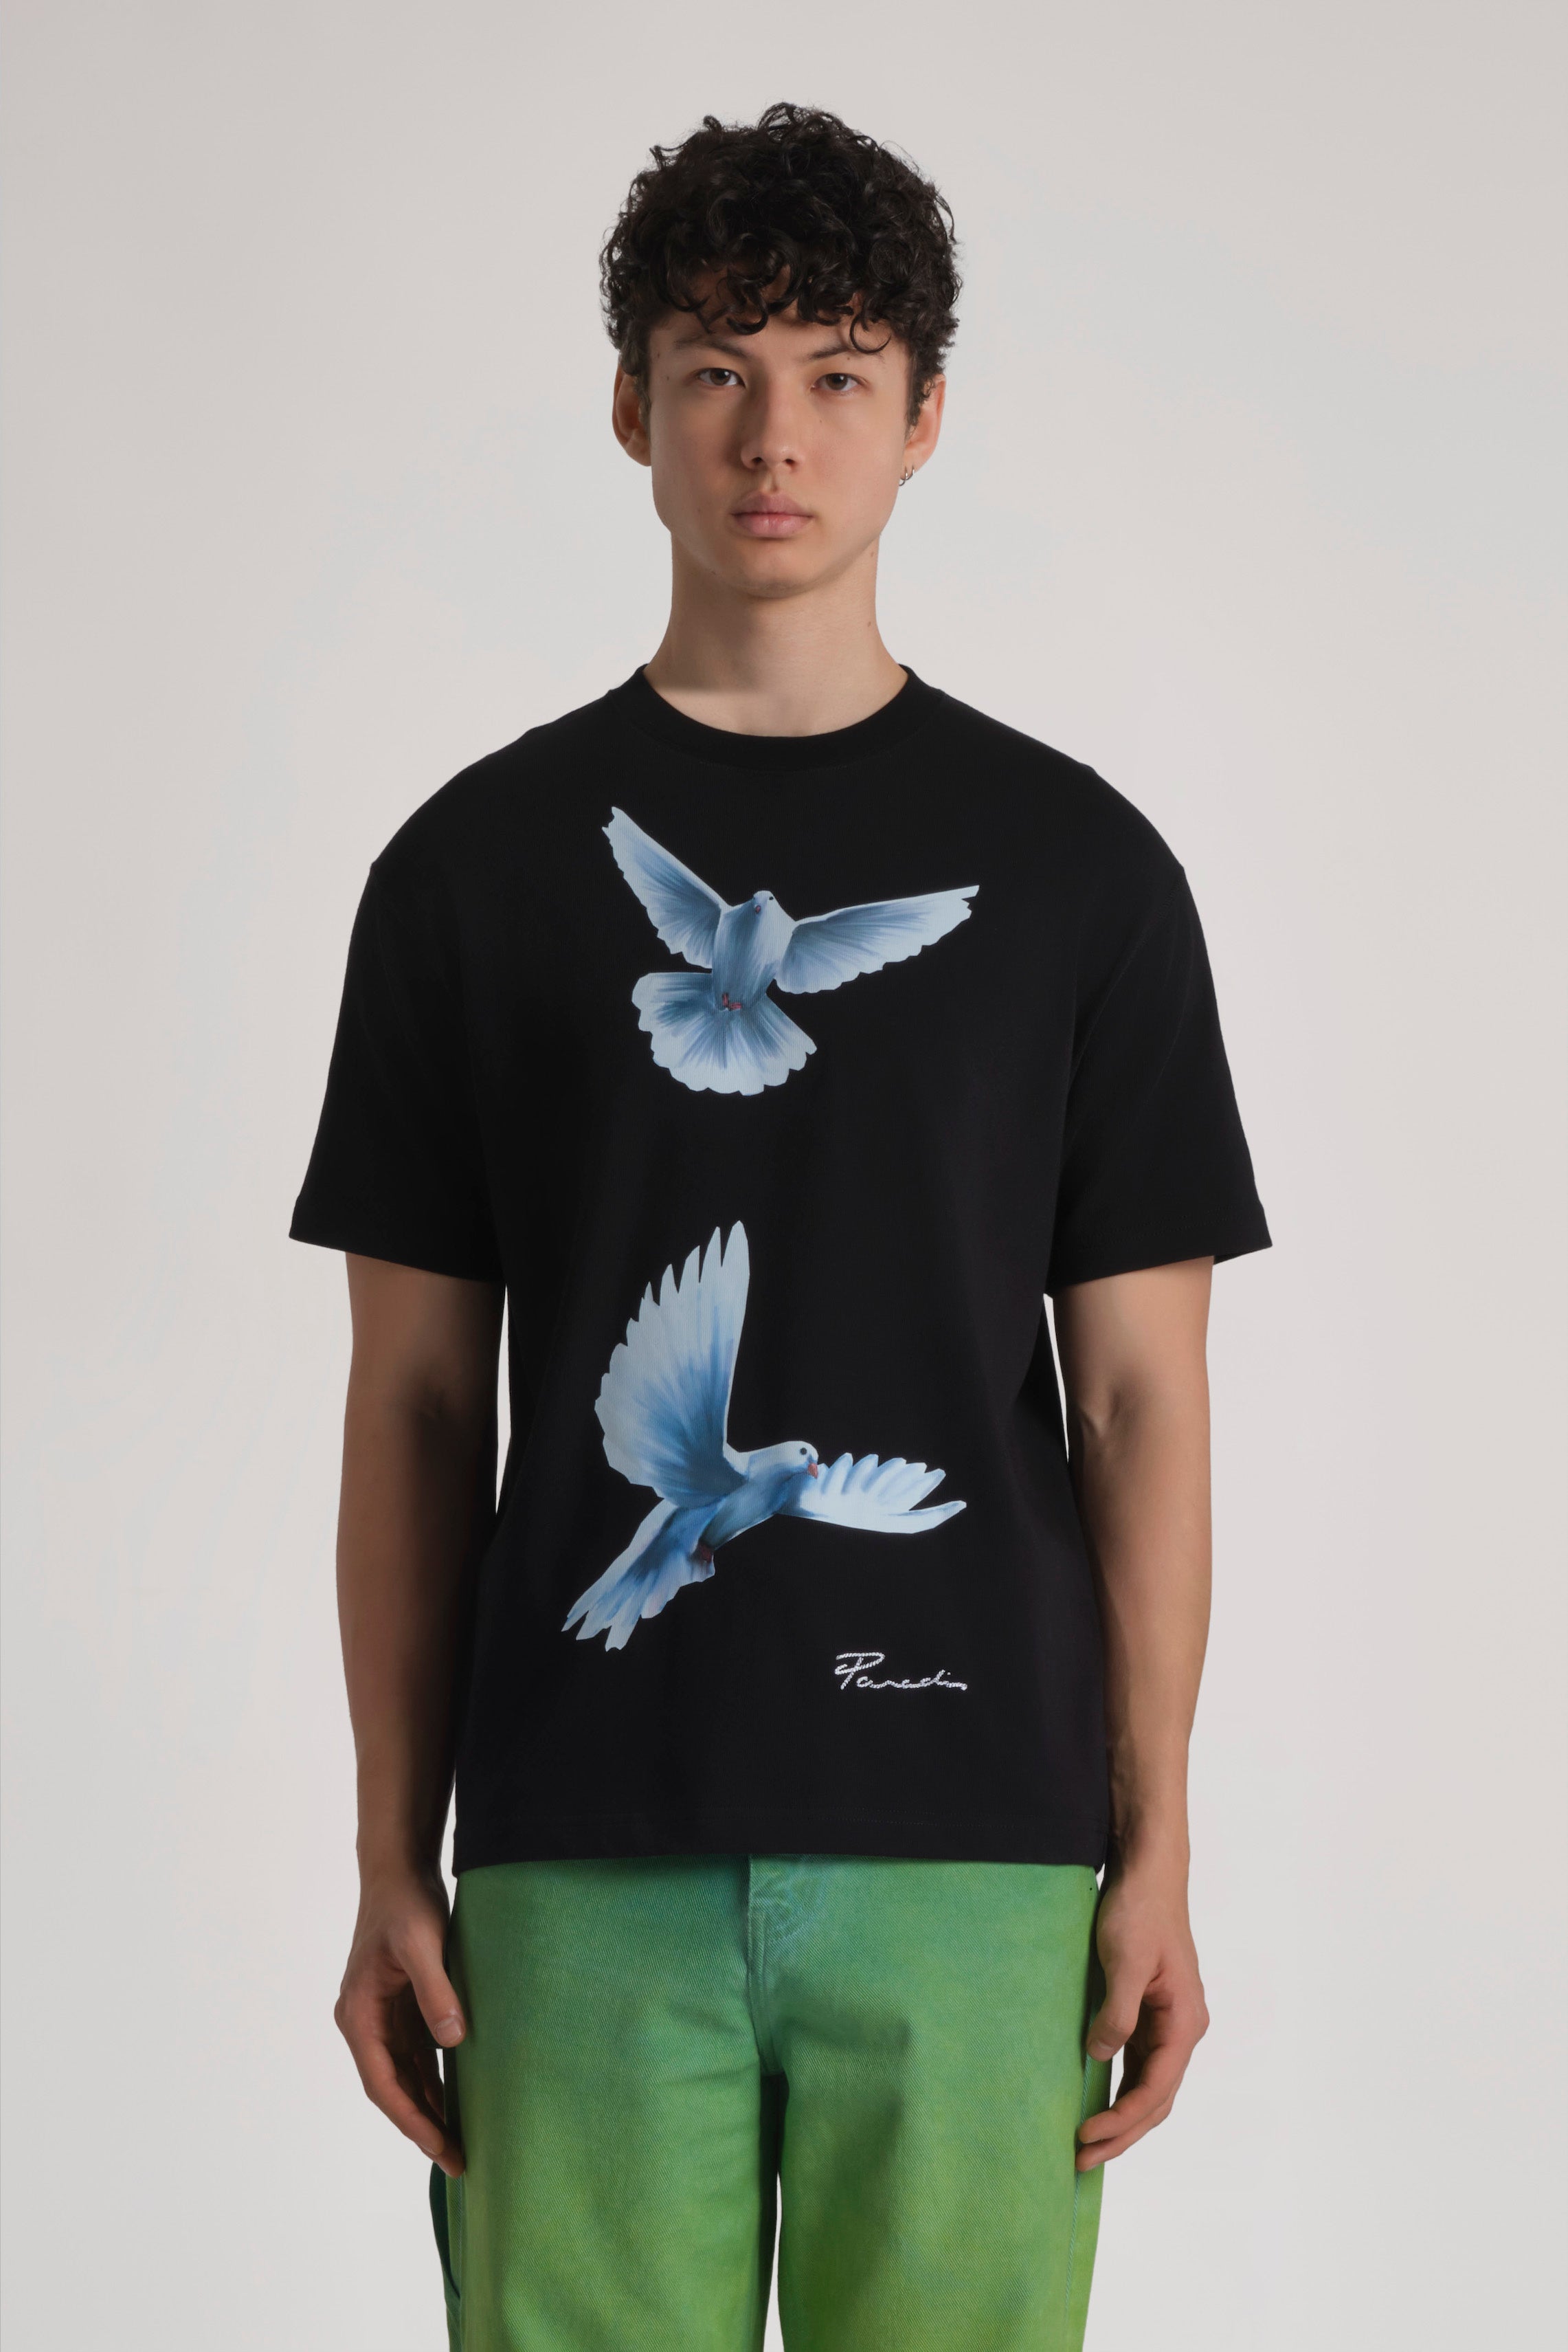 Freedom Doves T-shirt